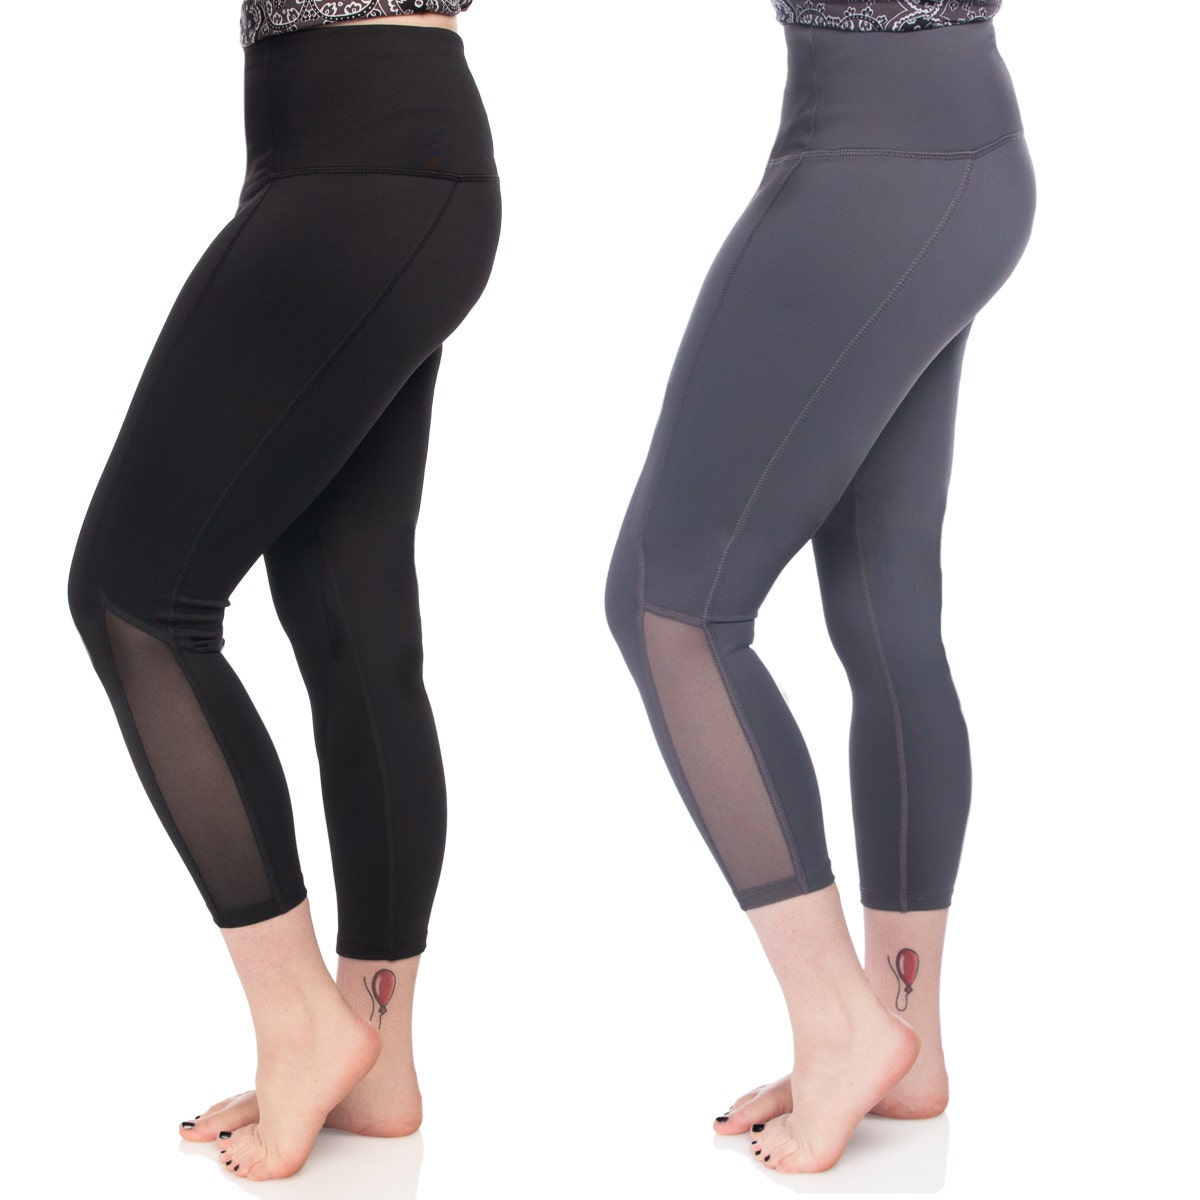 Danskin Womens Ultra High Legging Tight with Pockets Black,Medium at   Women's Clothing store